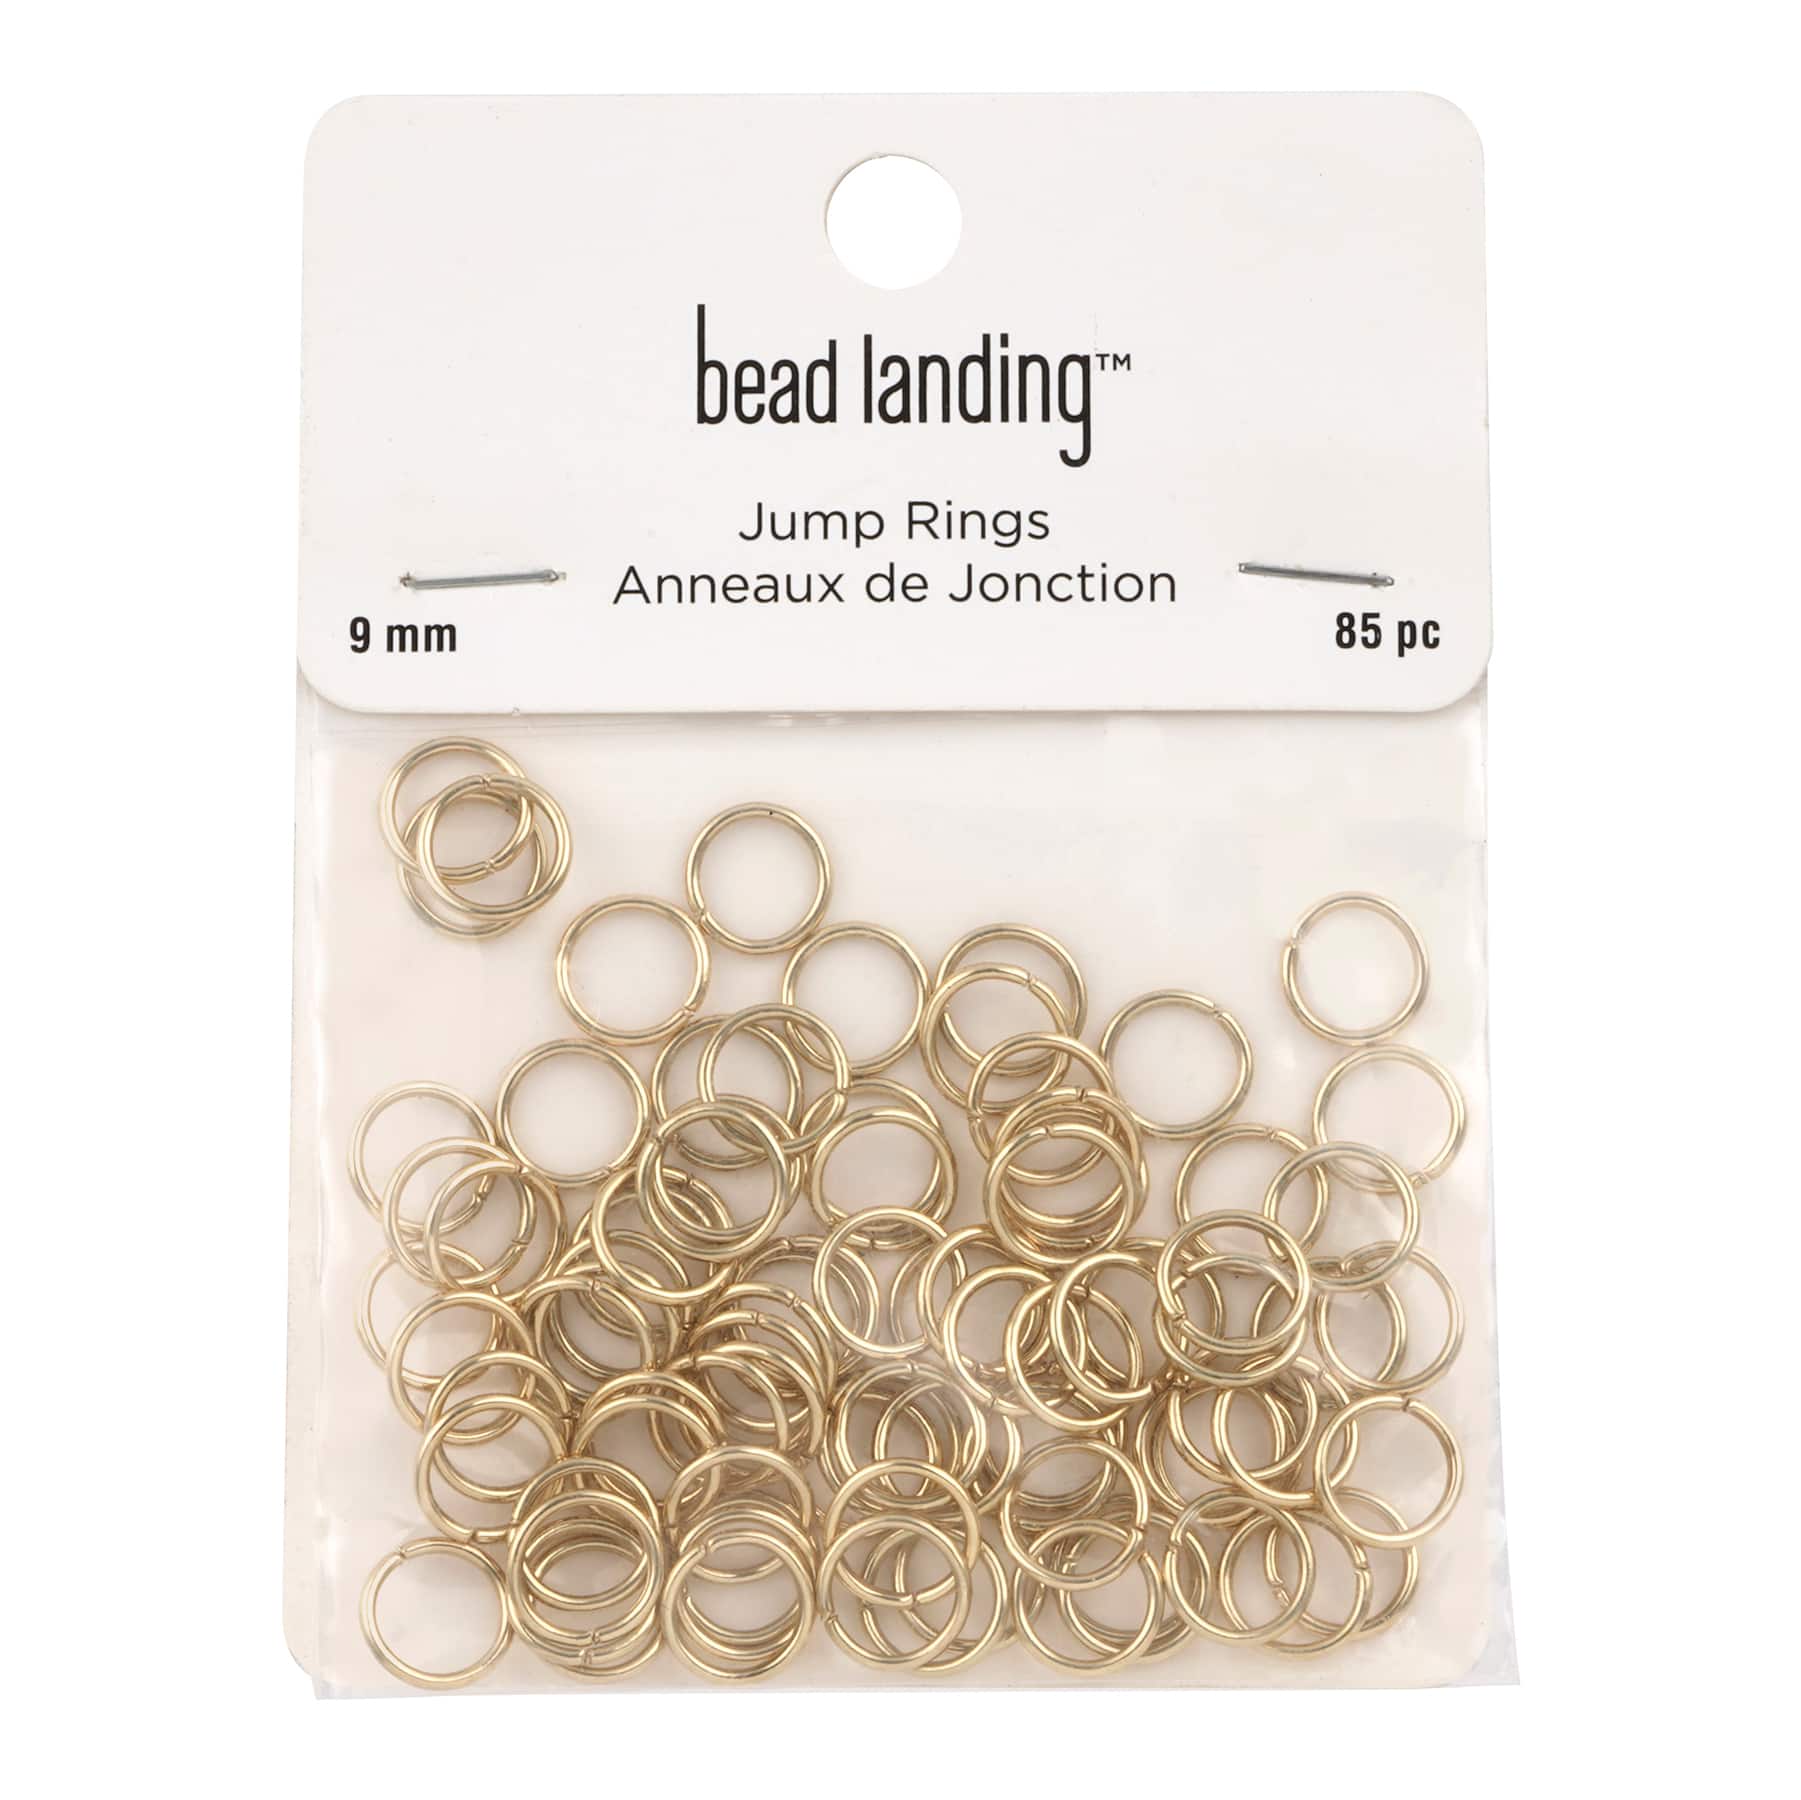 10mm Sterling Silver Jump Rings, 12ct. by Bead Landing™